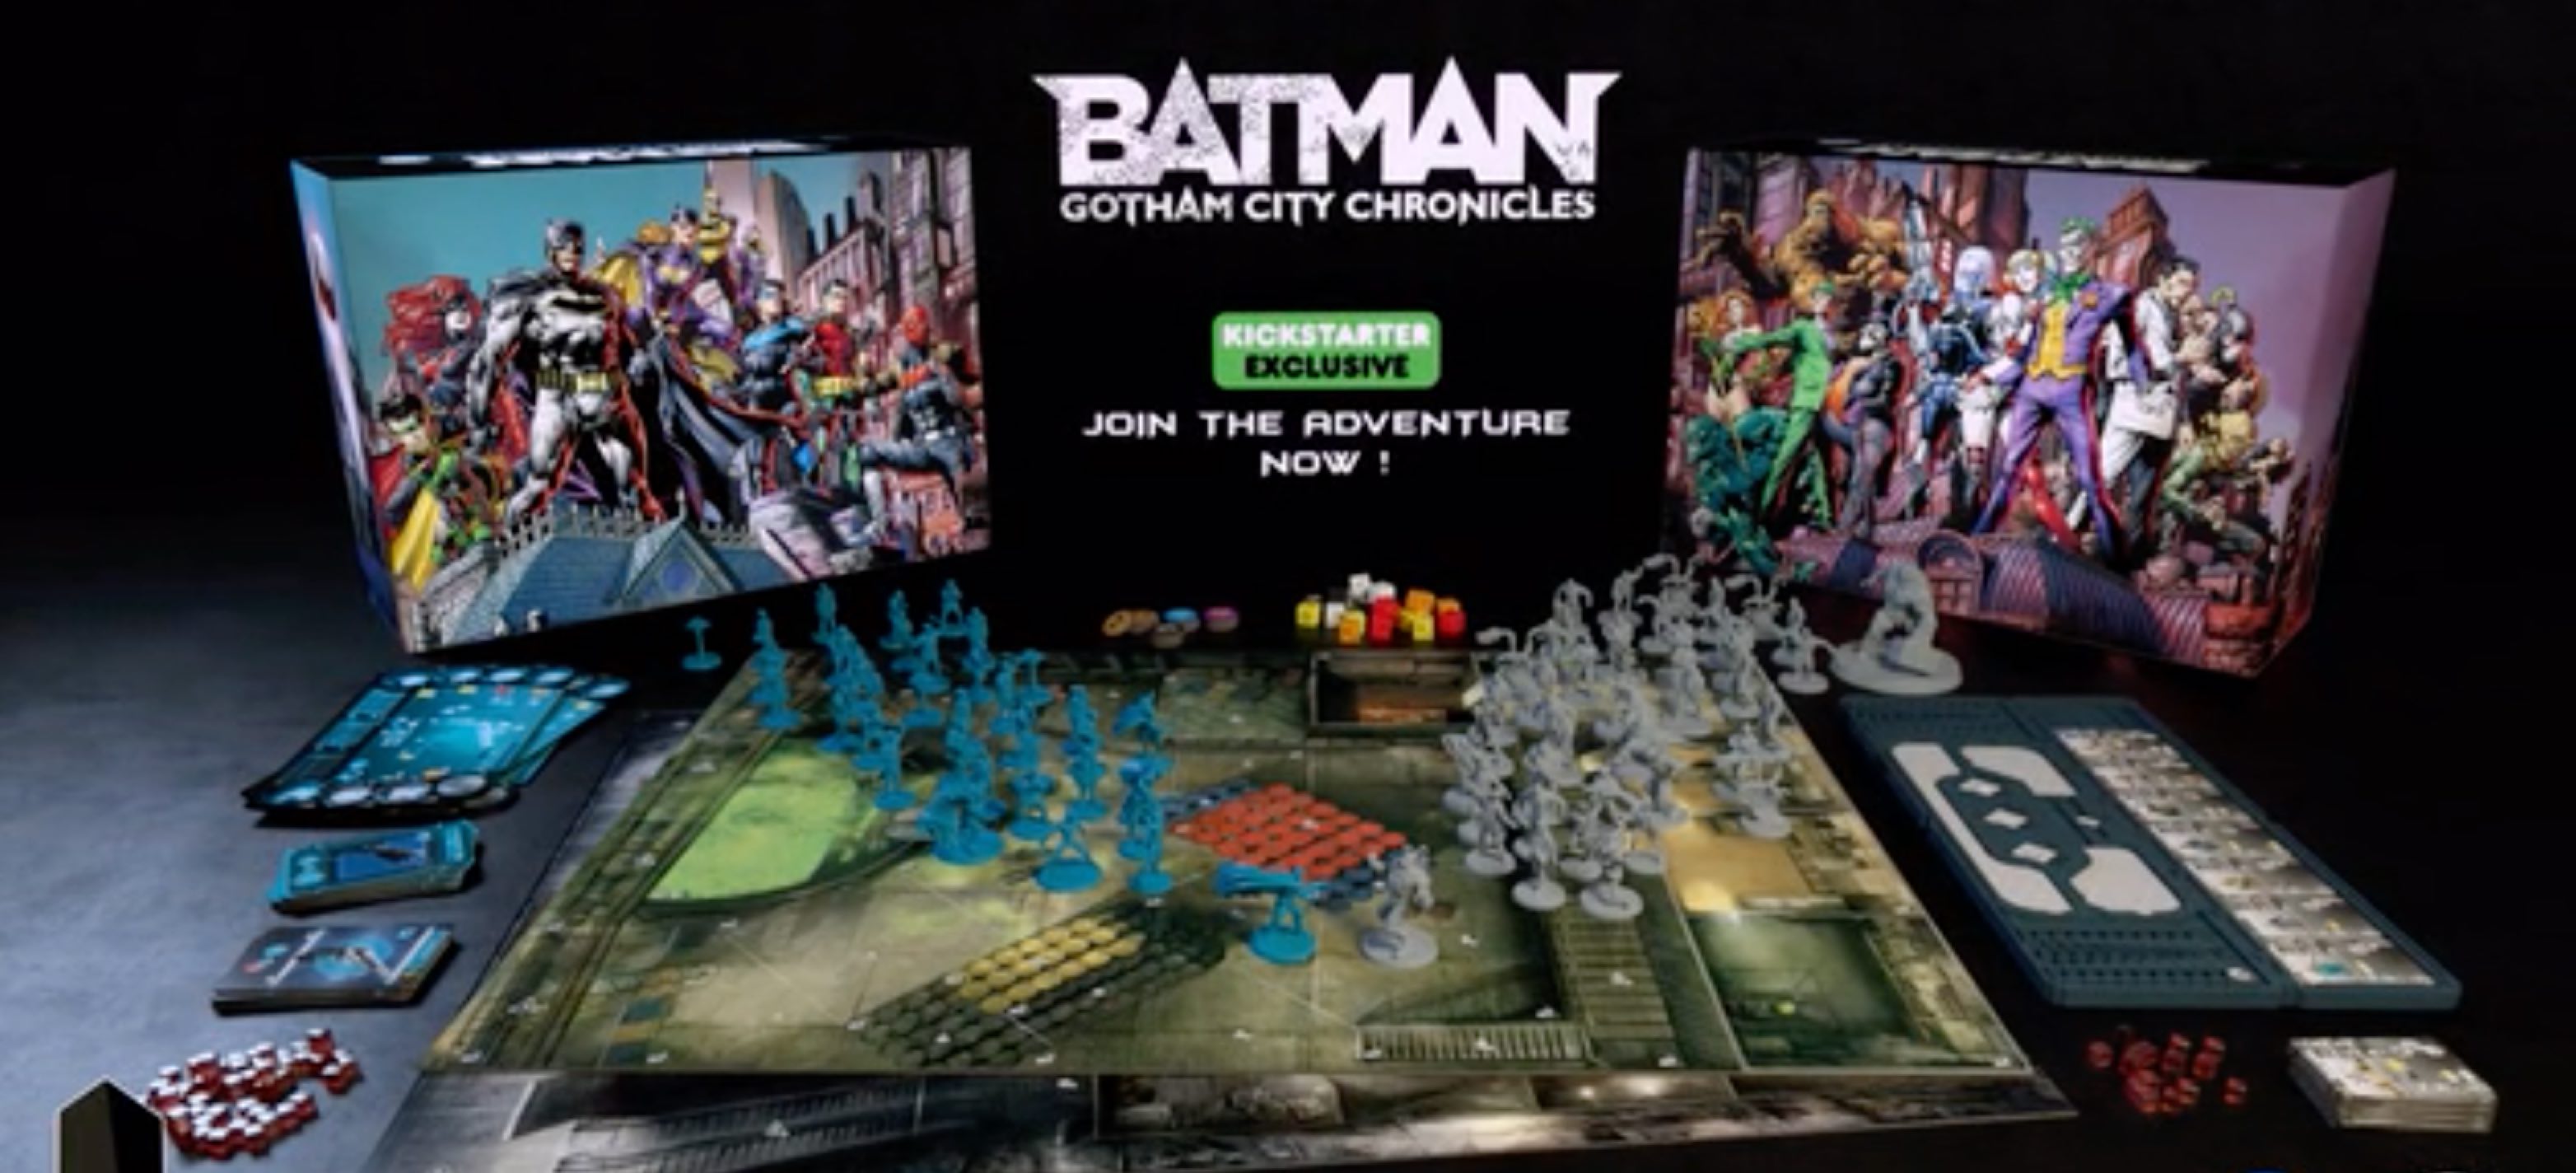 Batman-Gotham-City-Chronicles-1.jpg